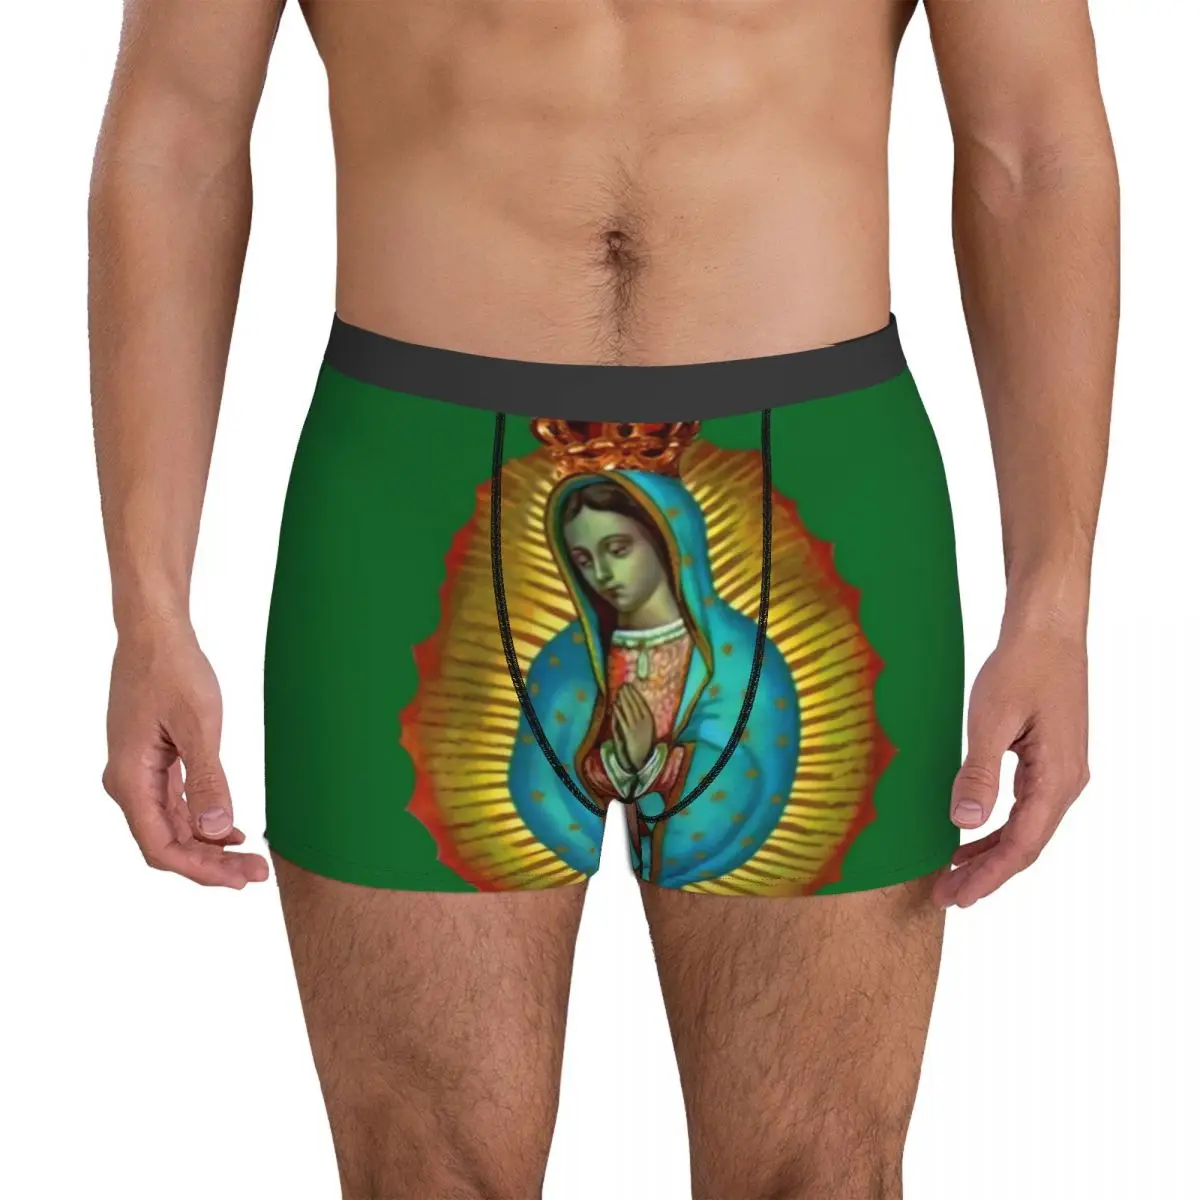 

Virgin Mary Underwear Our Lady of Guadalupe Men Shorts Briefs Plain Boxershorts Hot Sublimation Plus Size Underpants